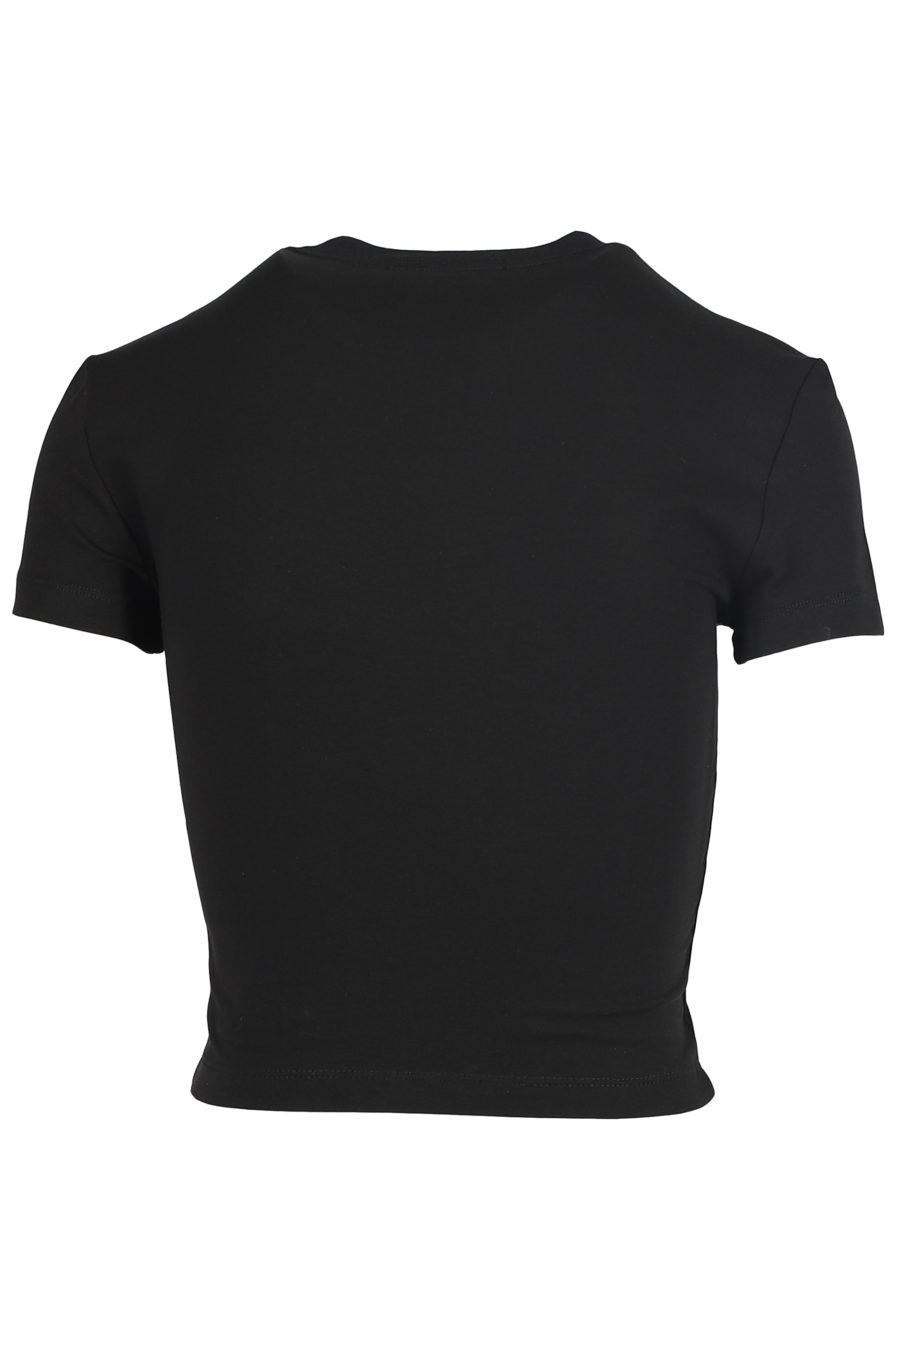 Camiseta negra con logo de purpurina - IMG 5484